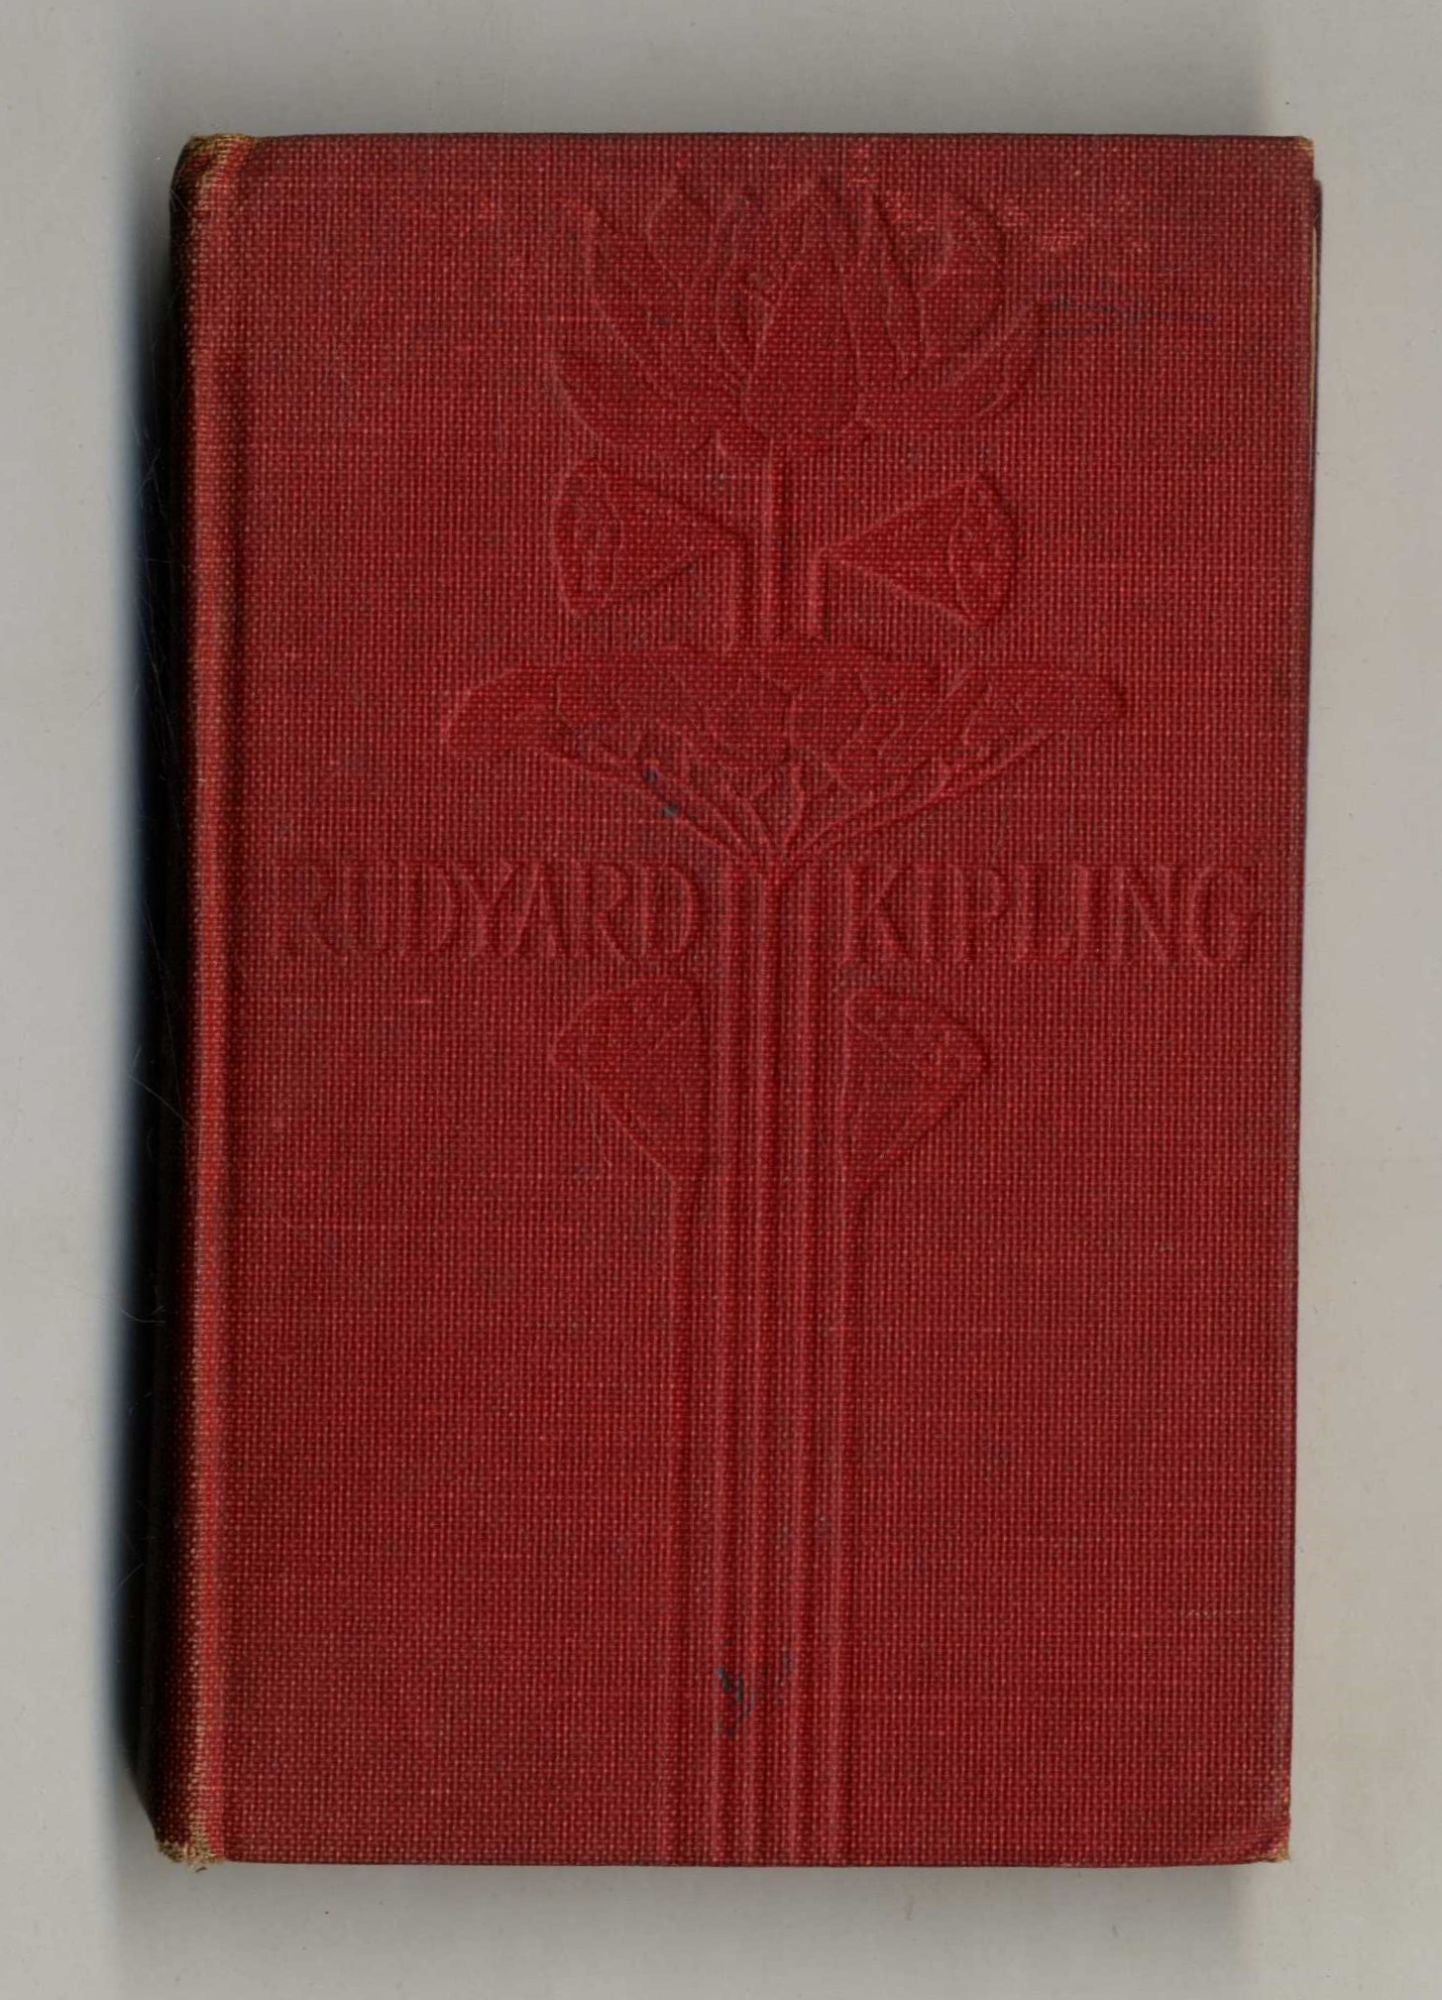 Book #160152 Departmental Ditties, Ballads, Barrack-Room Ballads, and Other Verses. Rudyard Kipling.